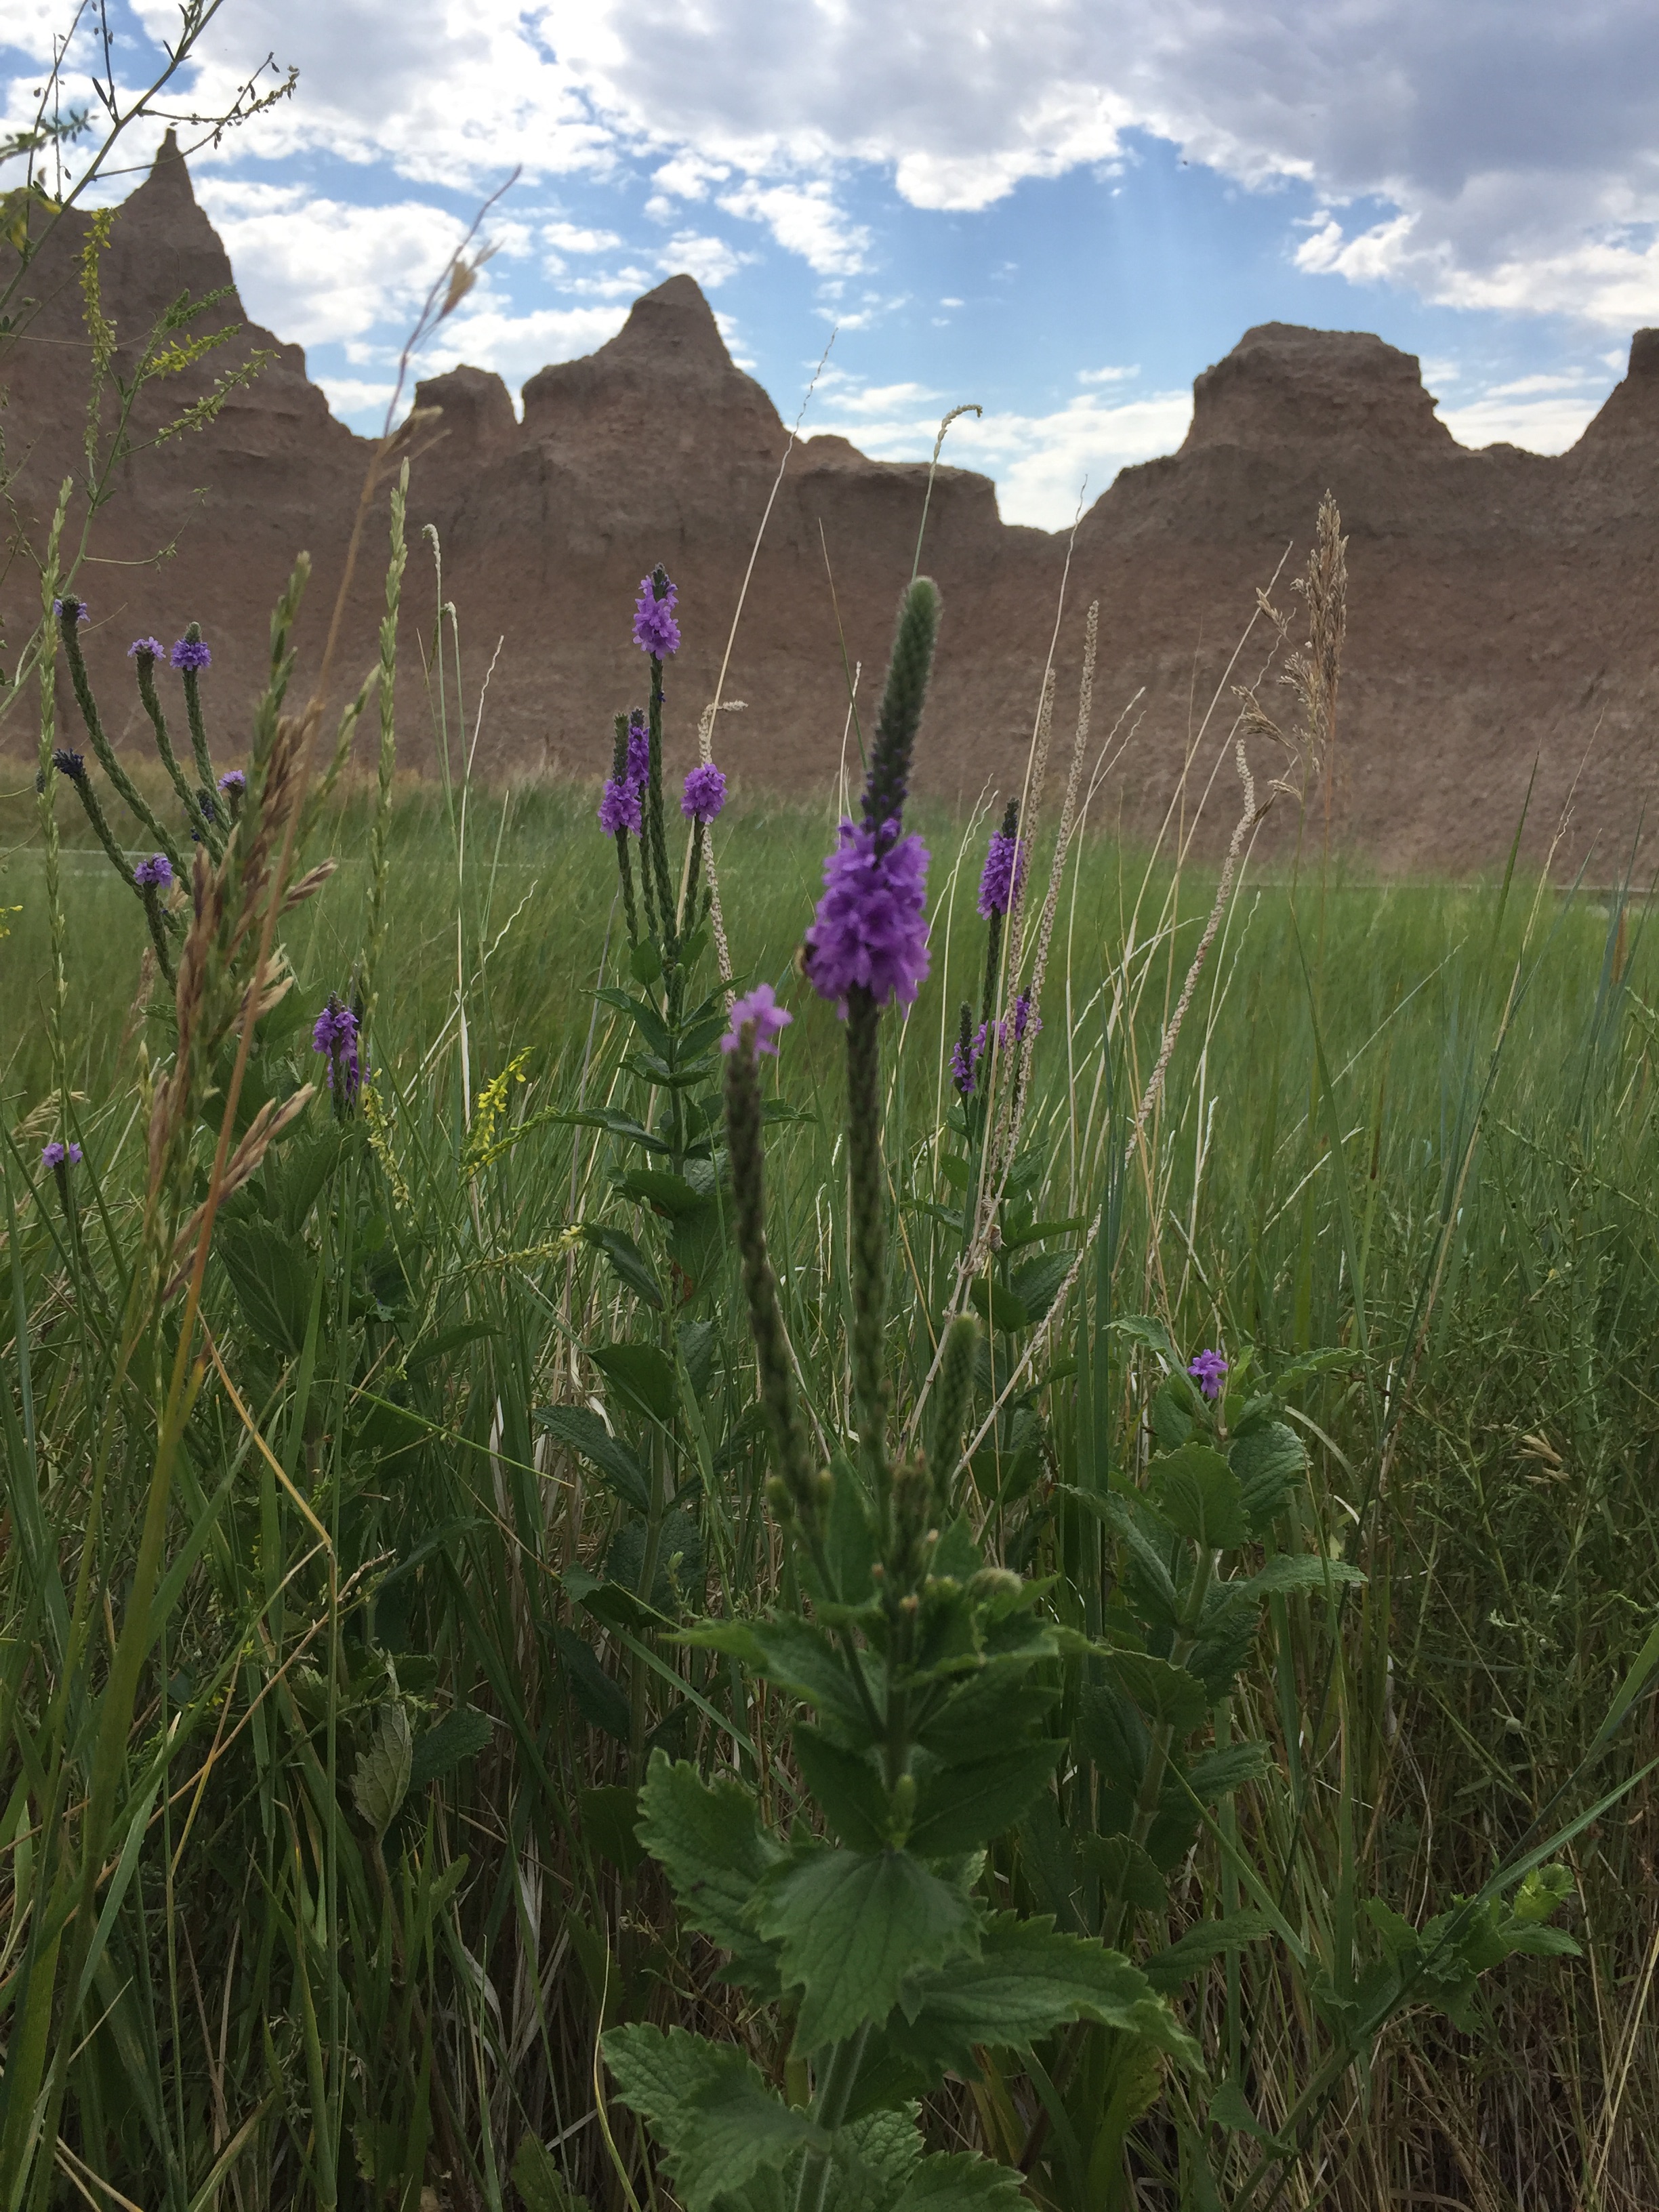  Wild flowers in the Badlands of South Dakota 